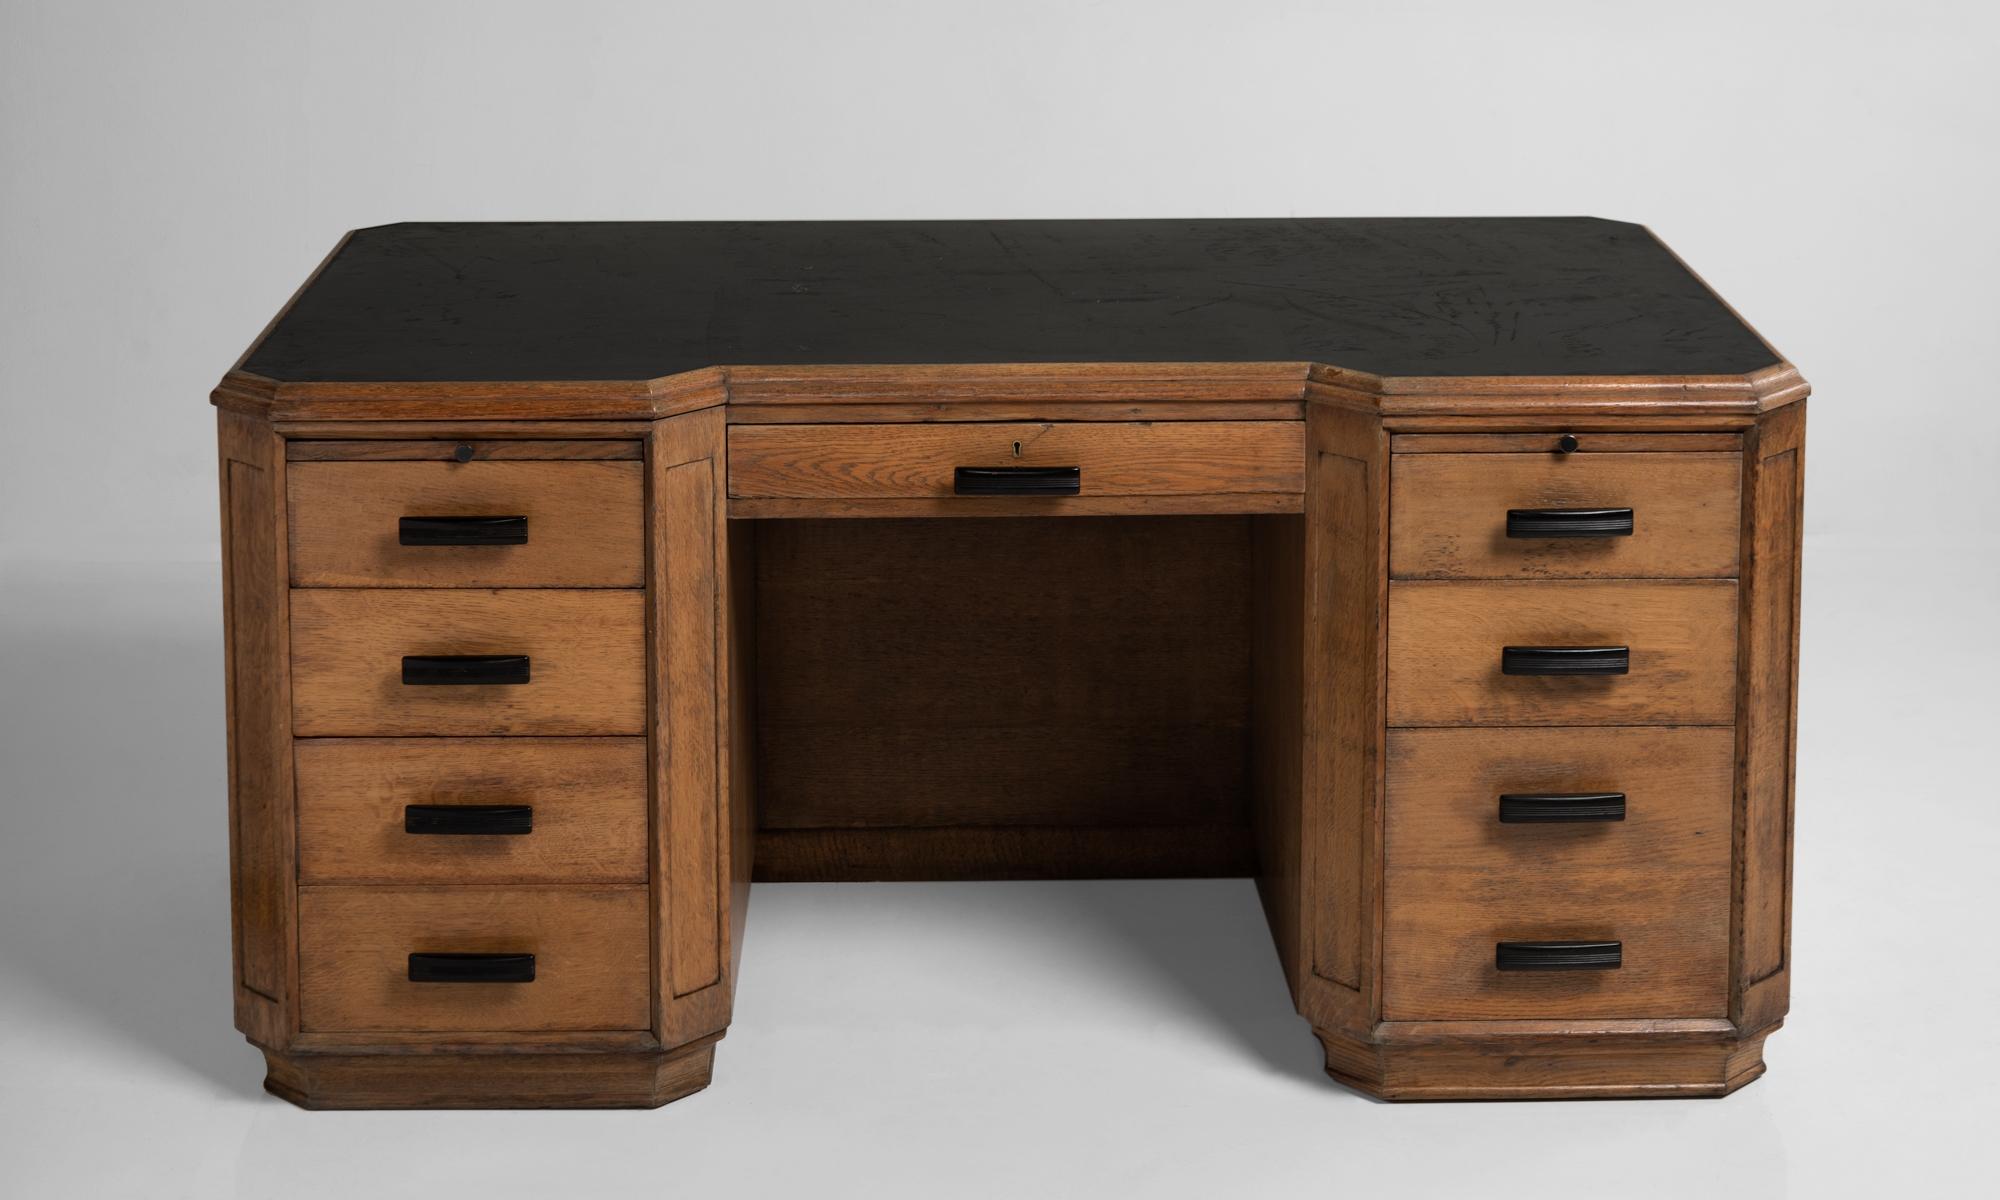 Edwardian oak desk, England, circa 1910.

With black leather surface, ebonized pulls, drawers and cabinets for storage.